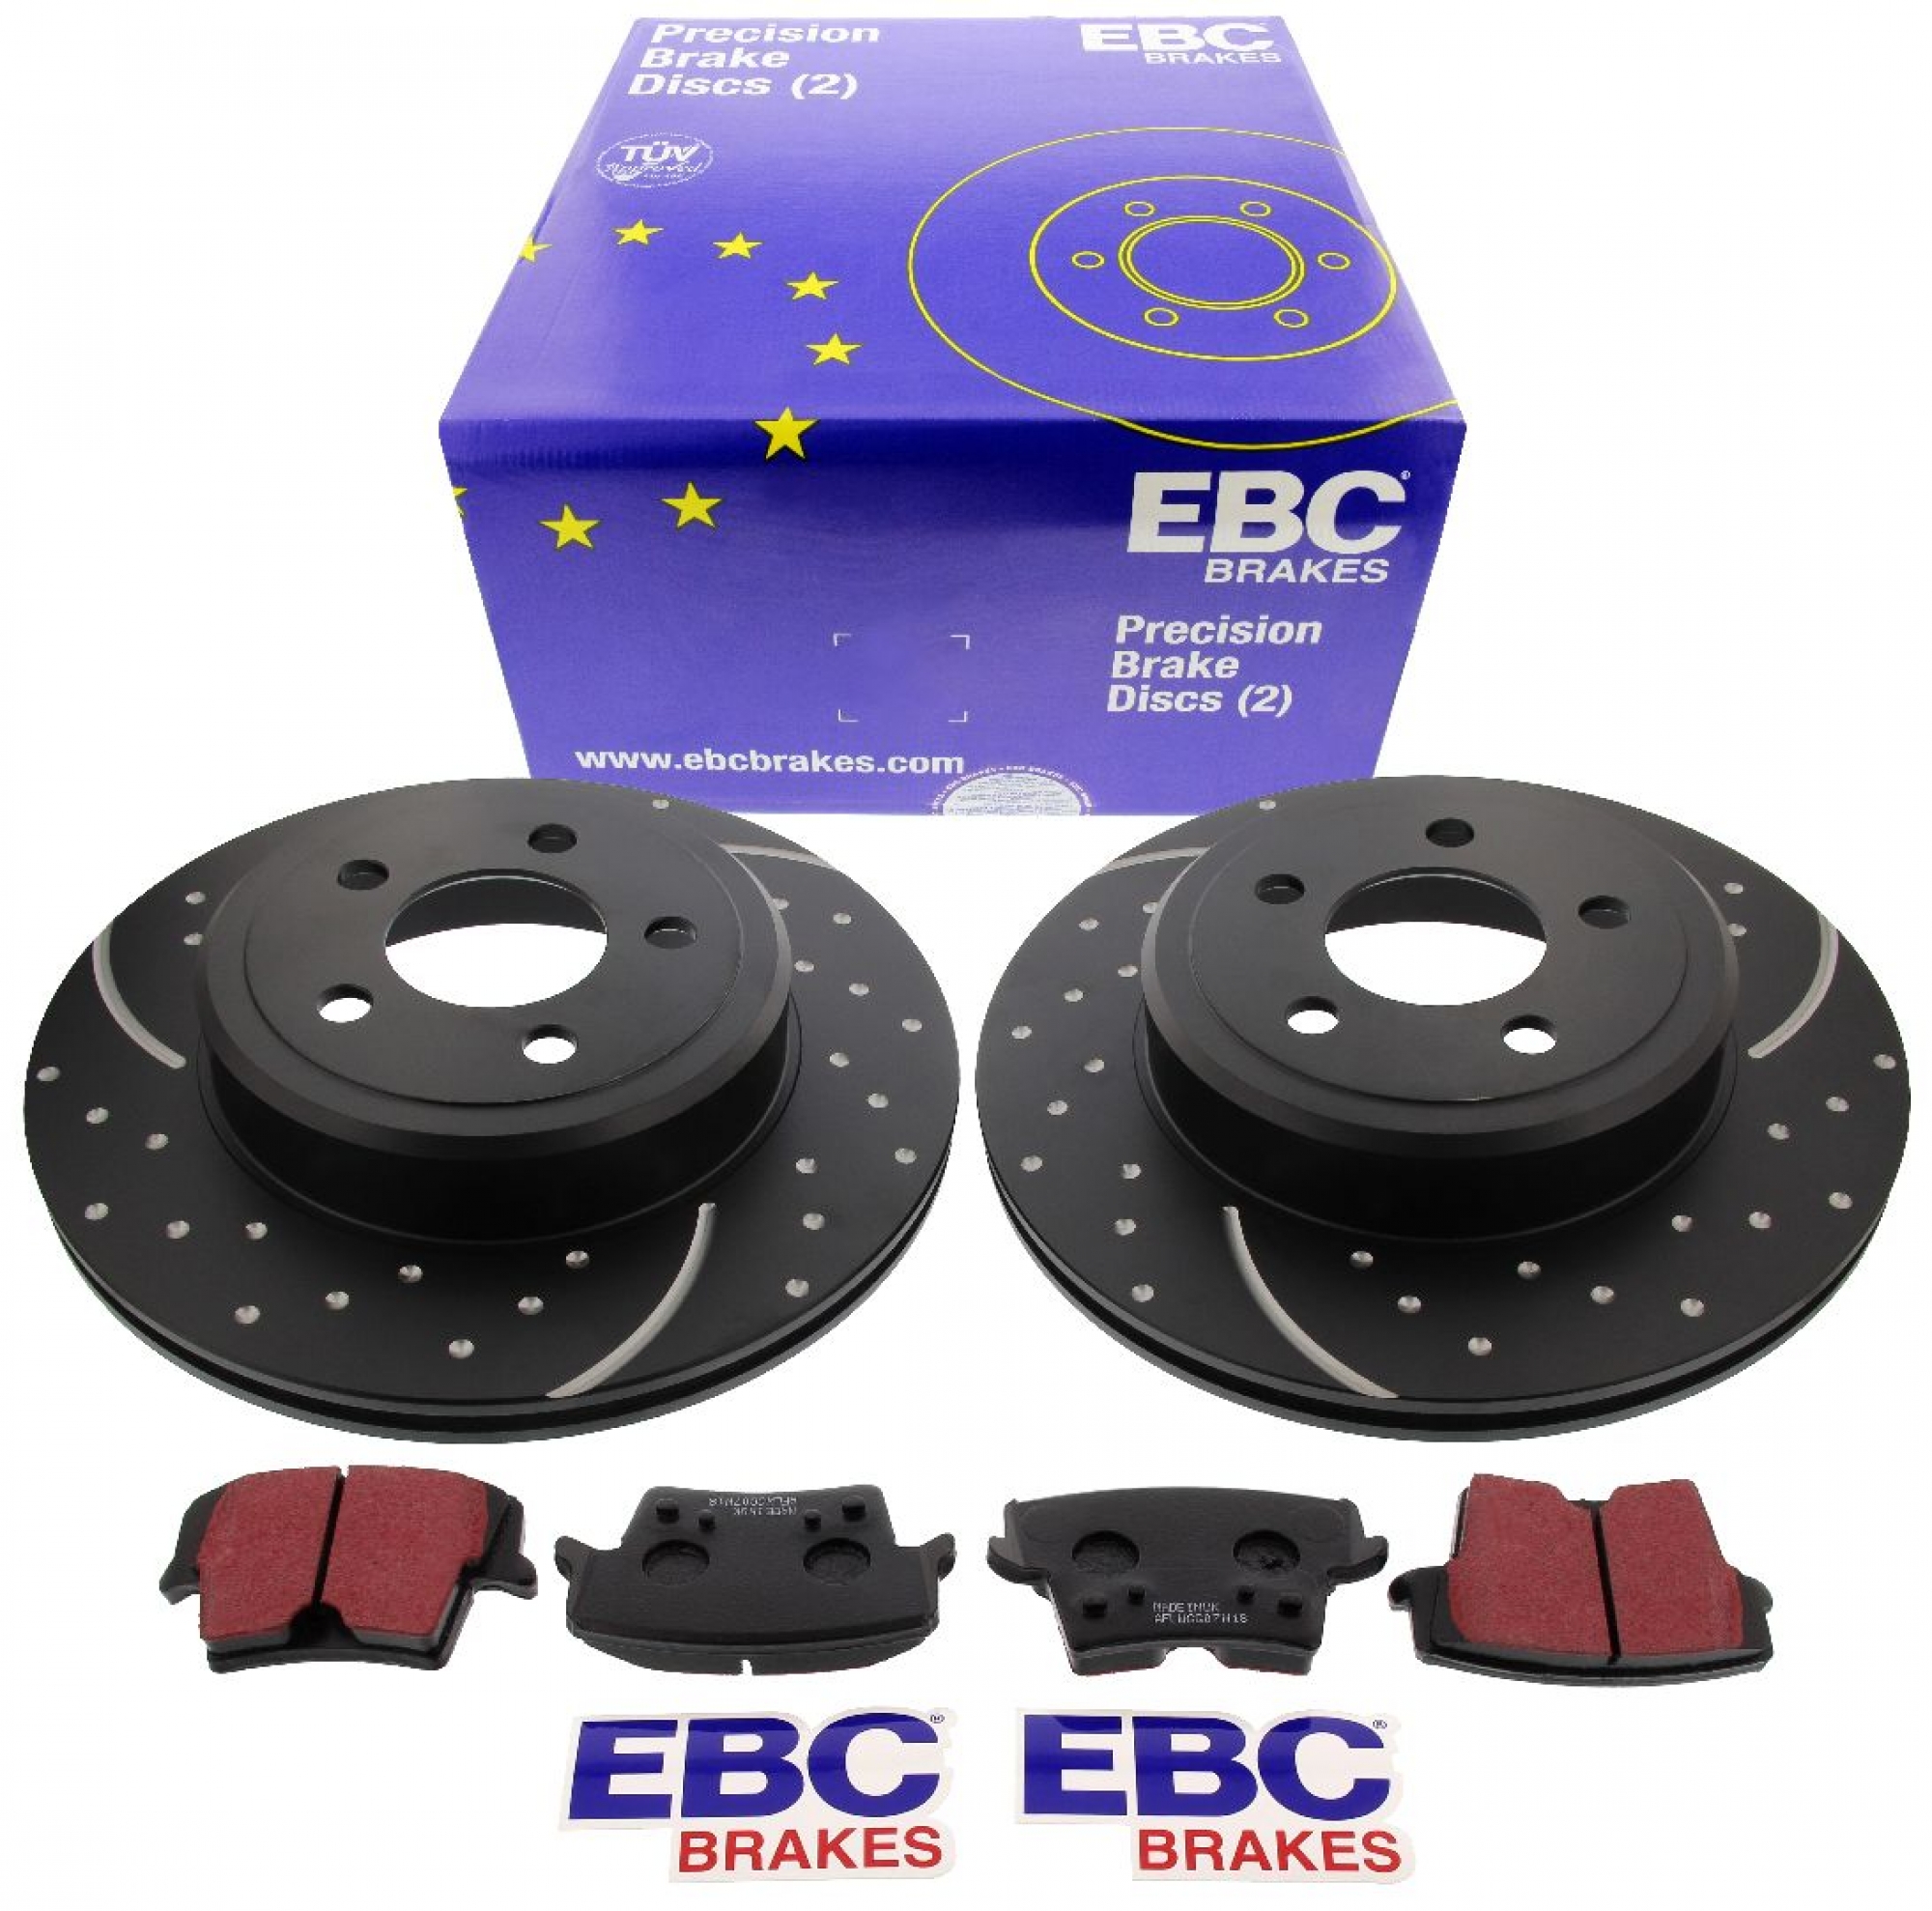 EBC-Bremsensatz, Turbo Groove Disc Black + Bremsbeläge, Blackstuff, Achssatz, HA, Chrysler 300C, Lancia Thema